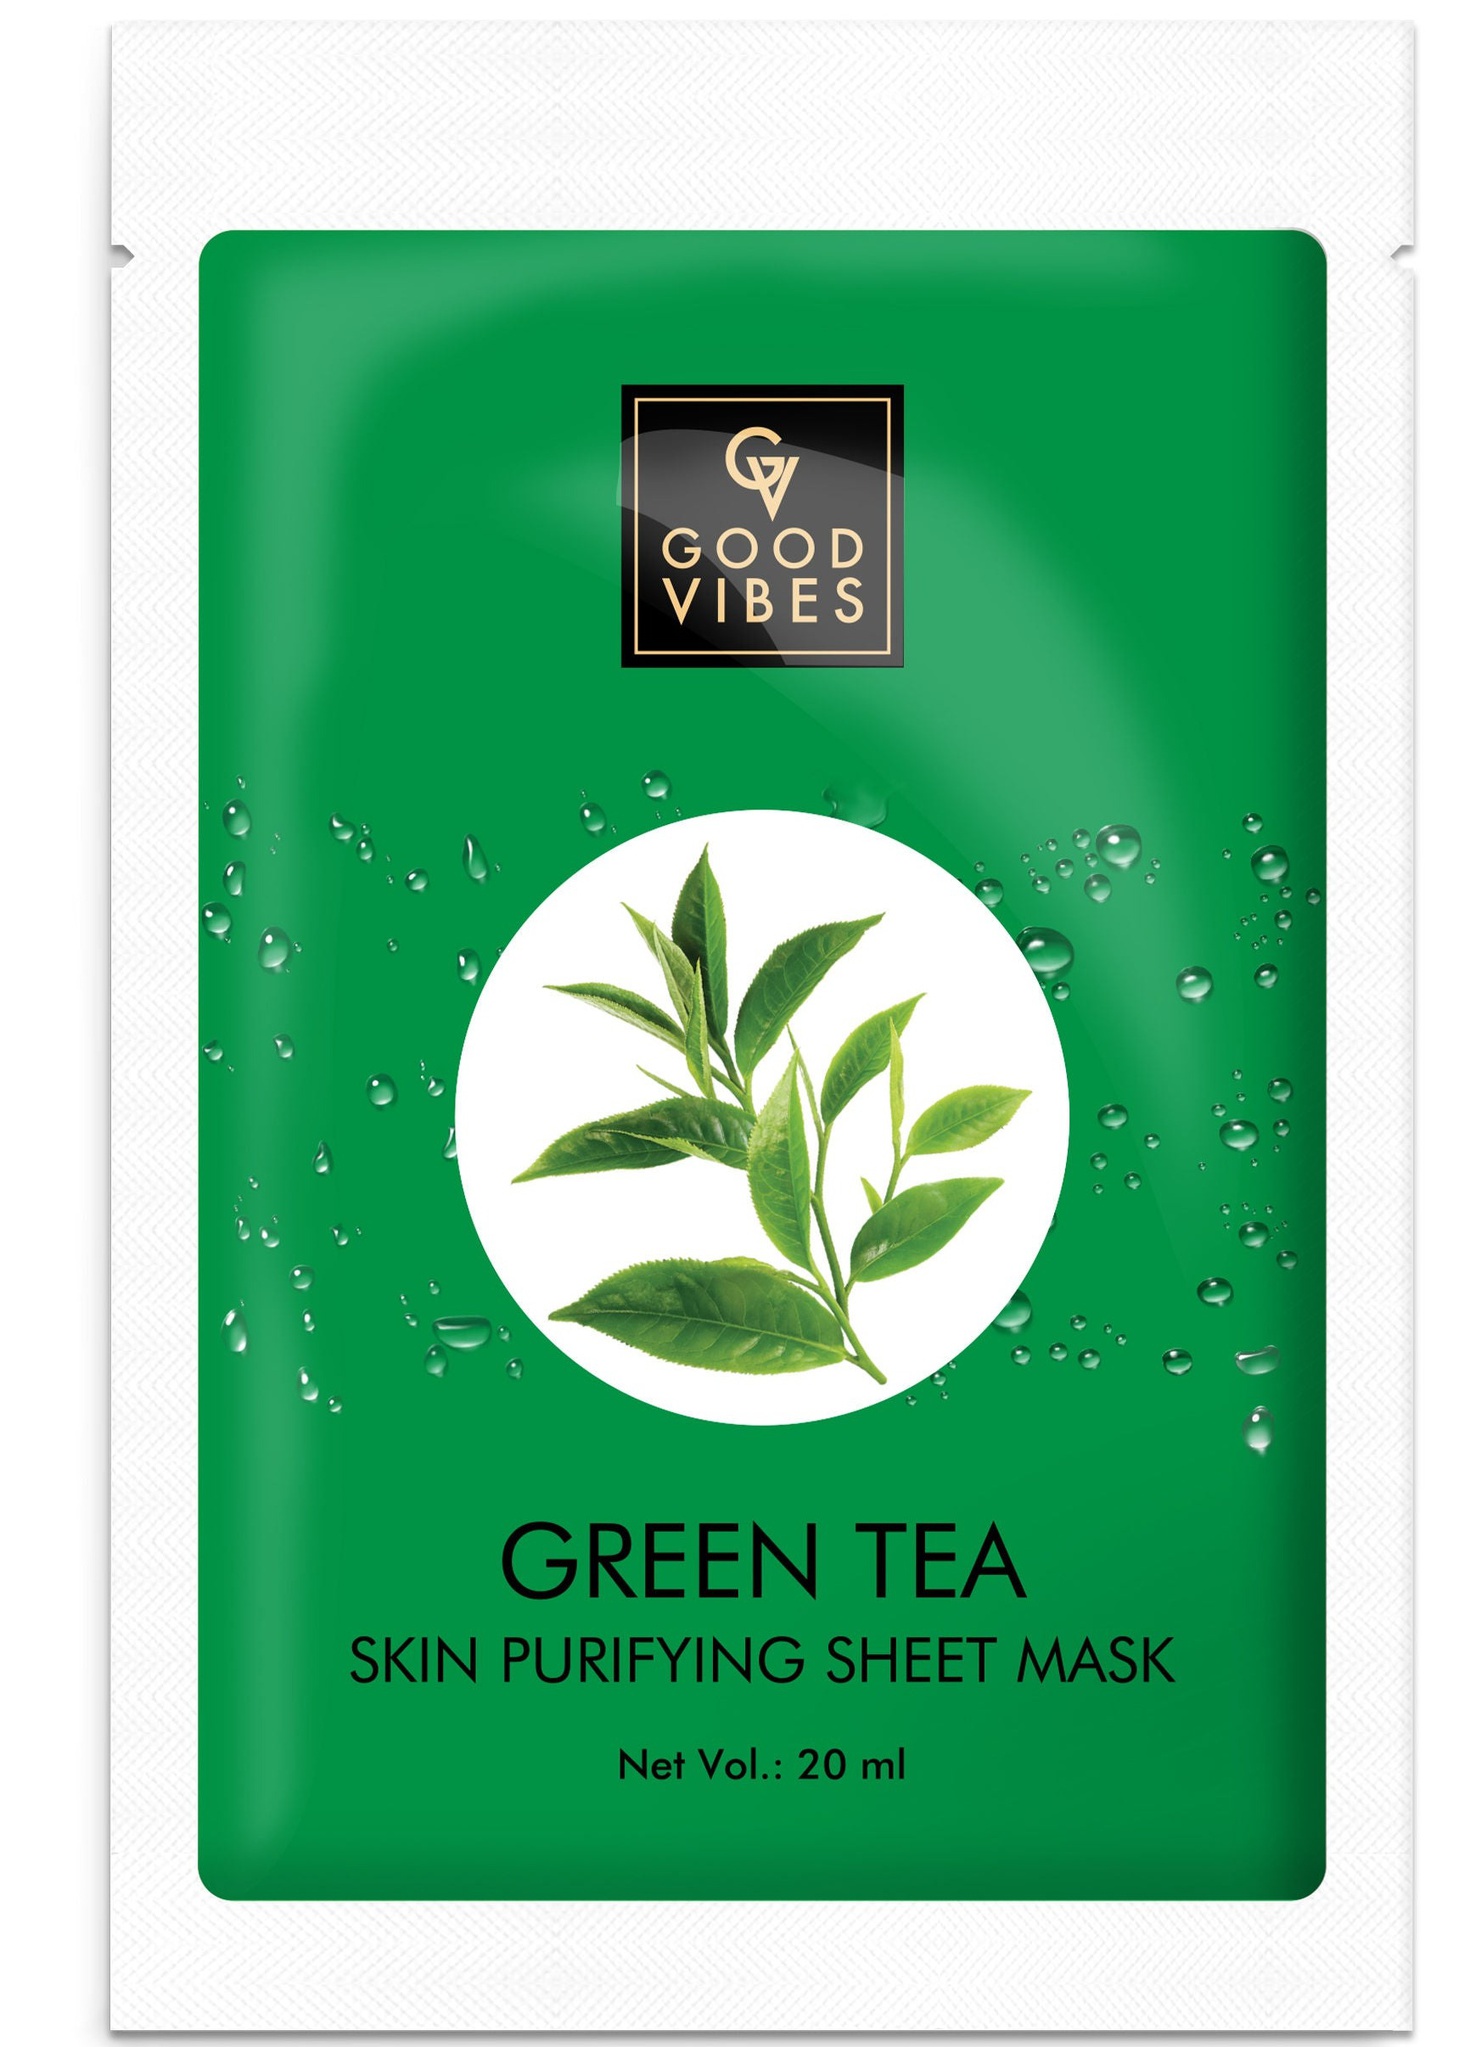 Good Vibes Skin Purifying Sheet Mask - Green Tea